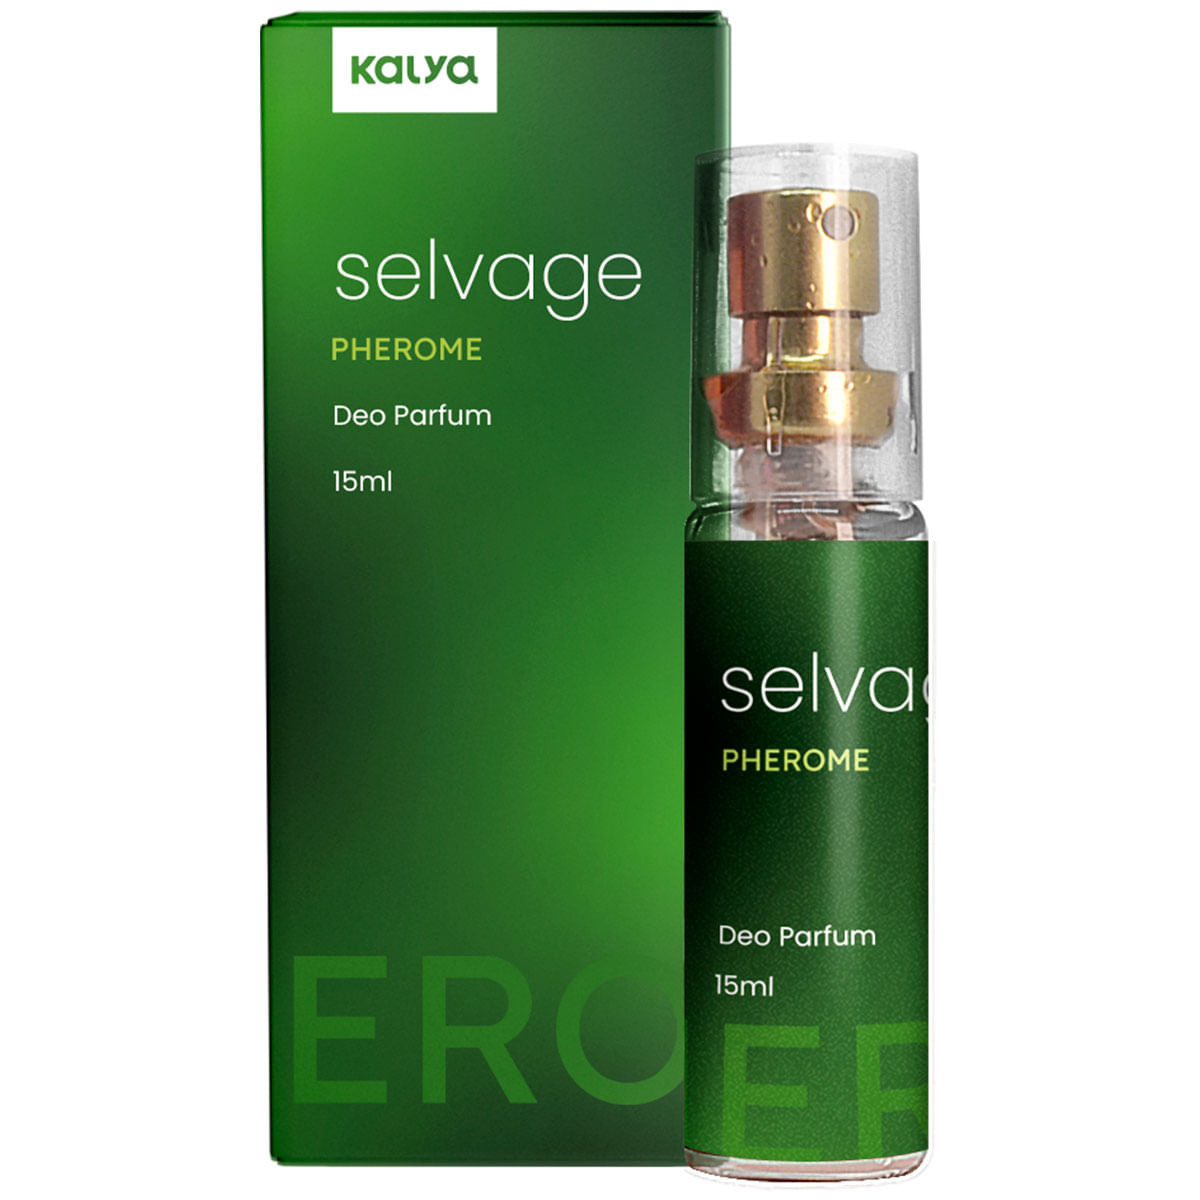 Selvage Pherome Perfume Masculino com Estimulador de Feromônio 15ml Kalya